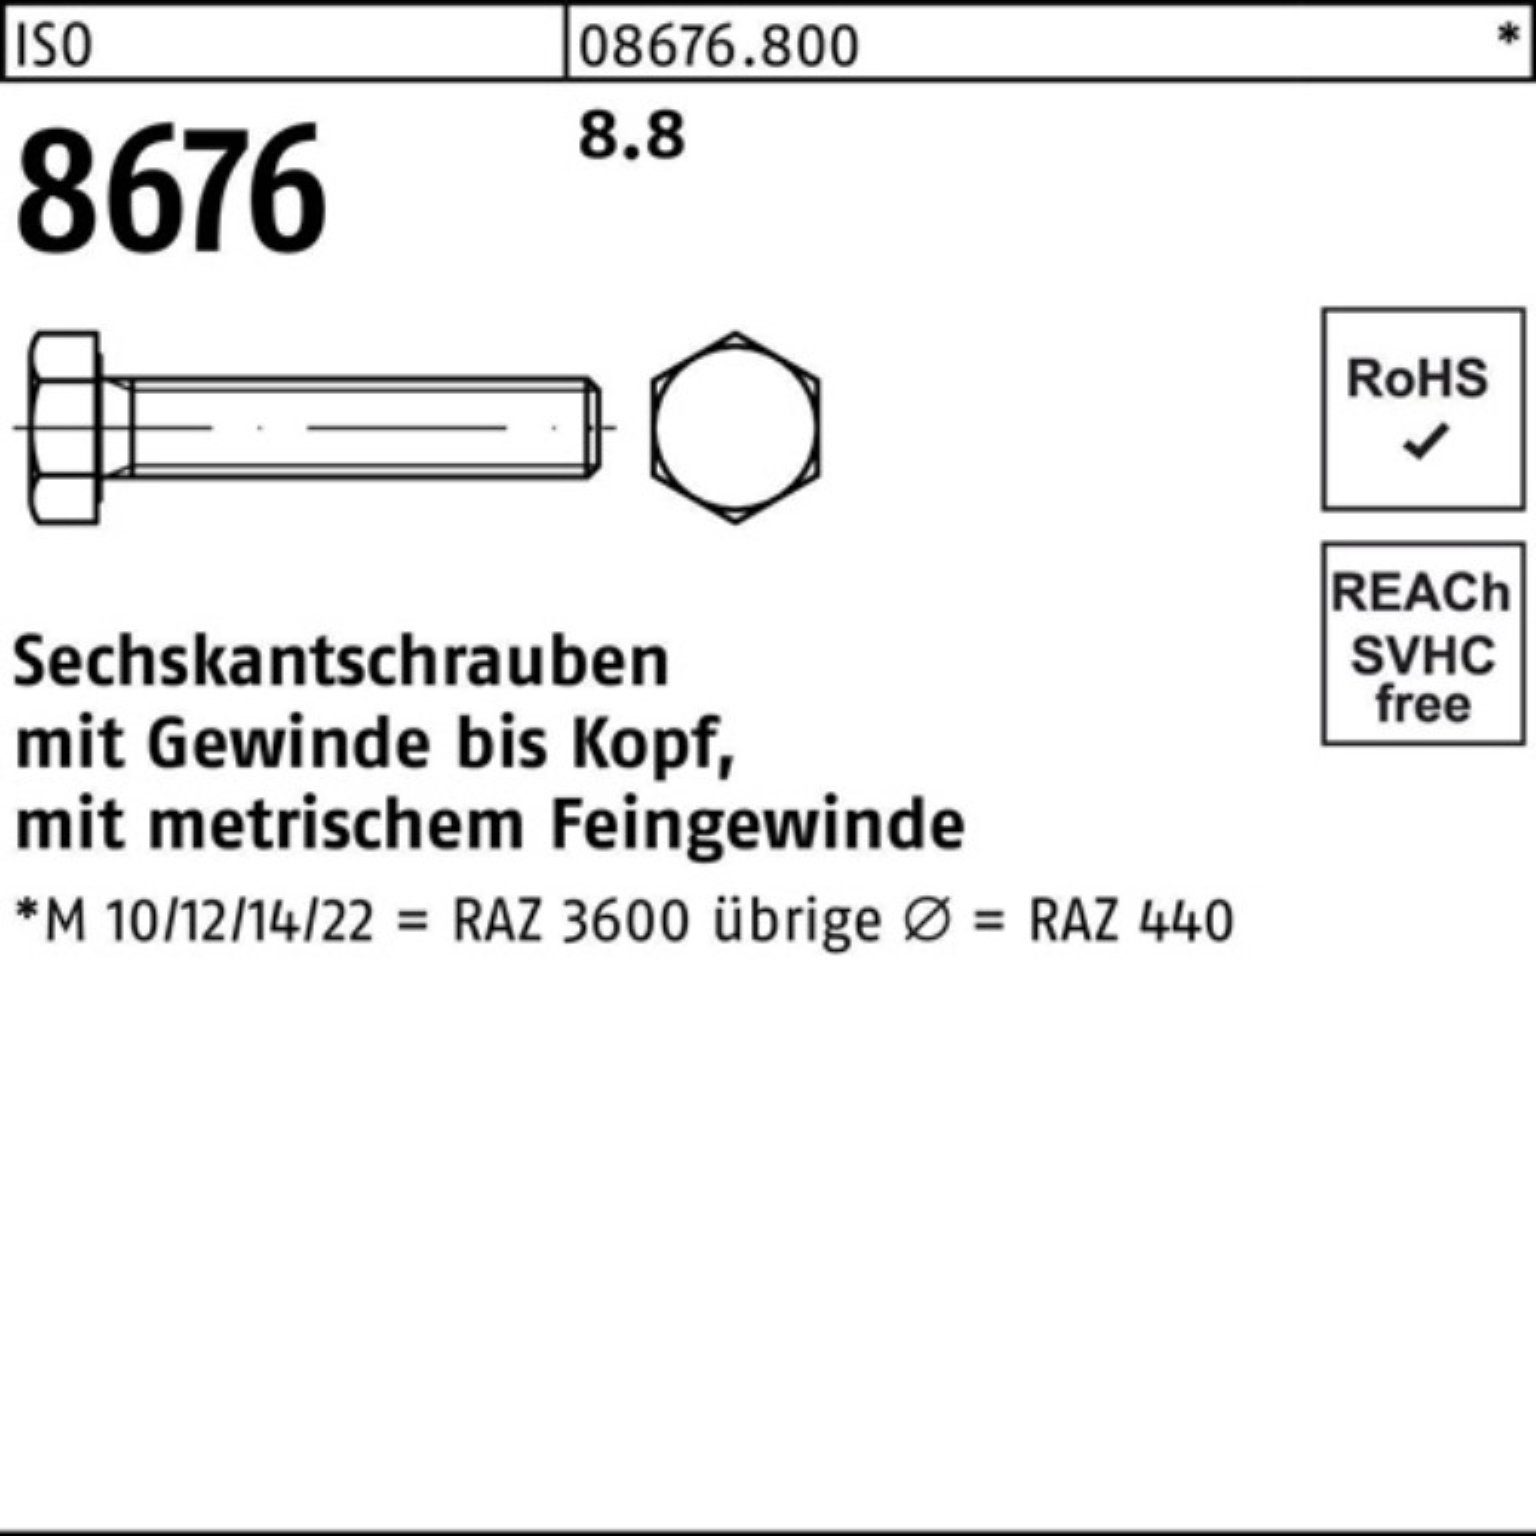 ISO Sechskantschraube Sechskantschraube 8676 55 M20x1,5x Pack Stück 8.8 25 VG ISO Reyher 100er